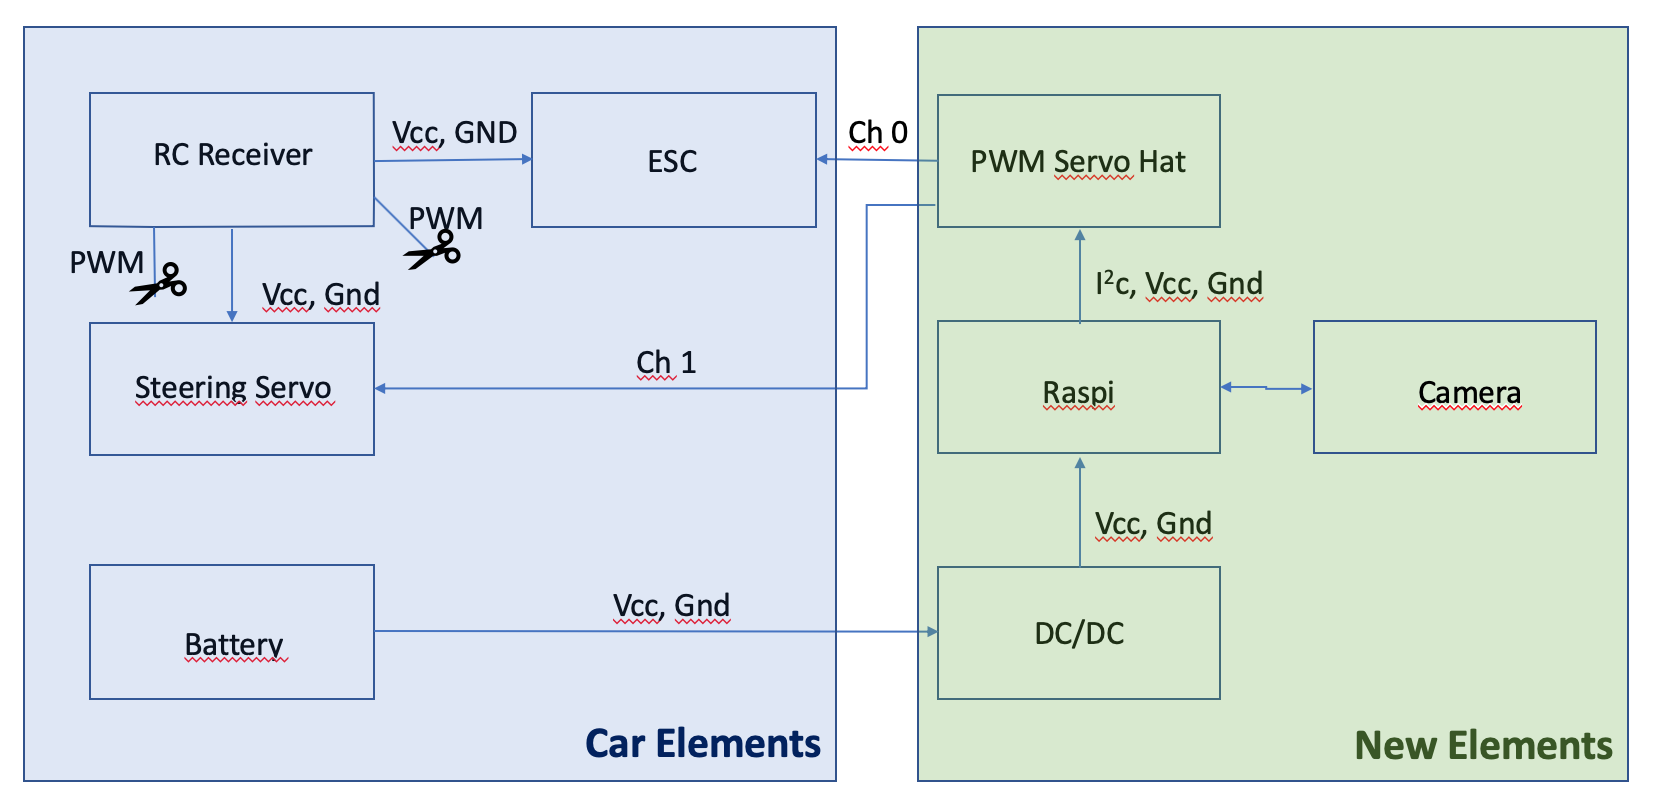 Wiring diagram after rewiring car